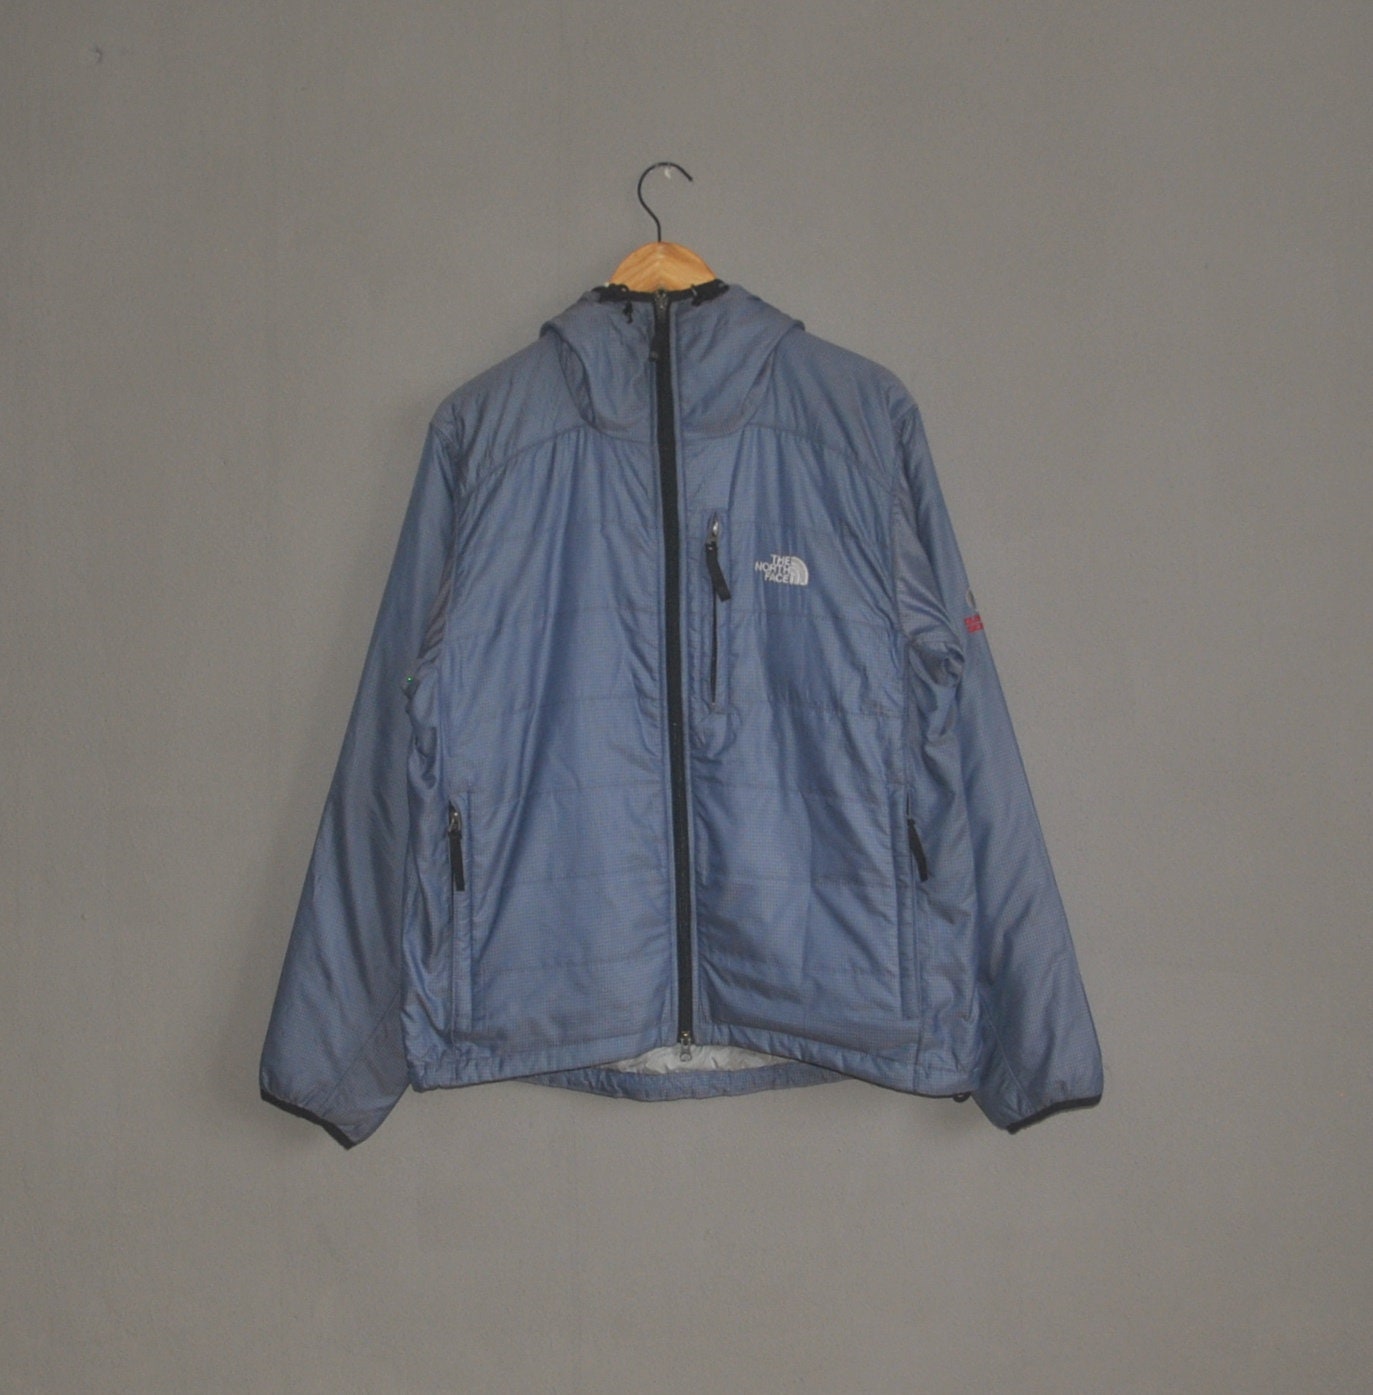 Vintage The North Face summit jacket